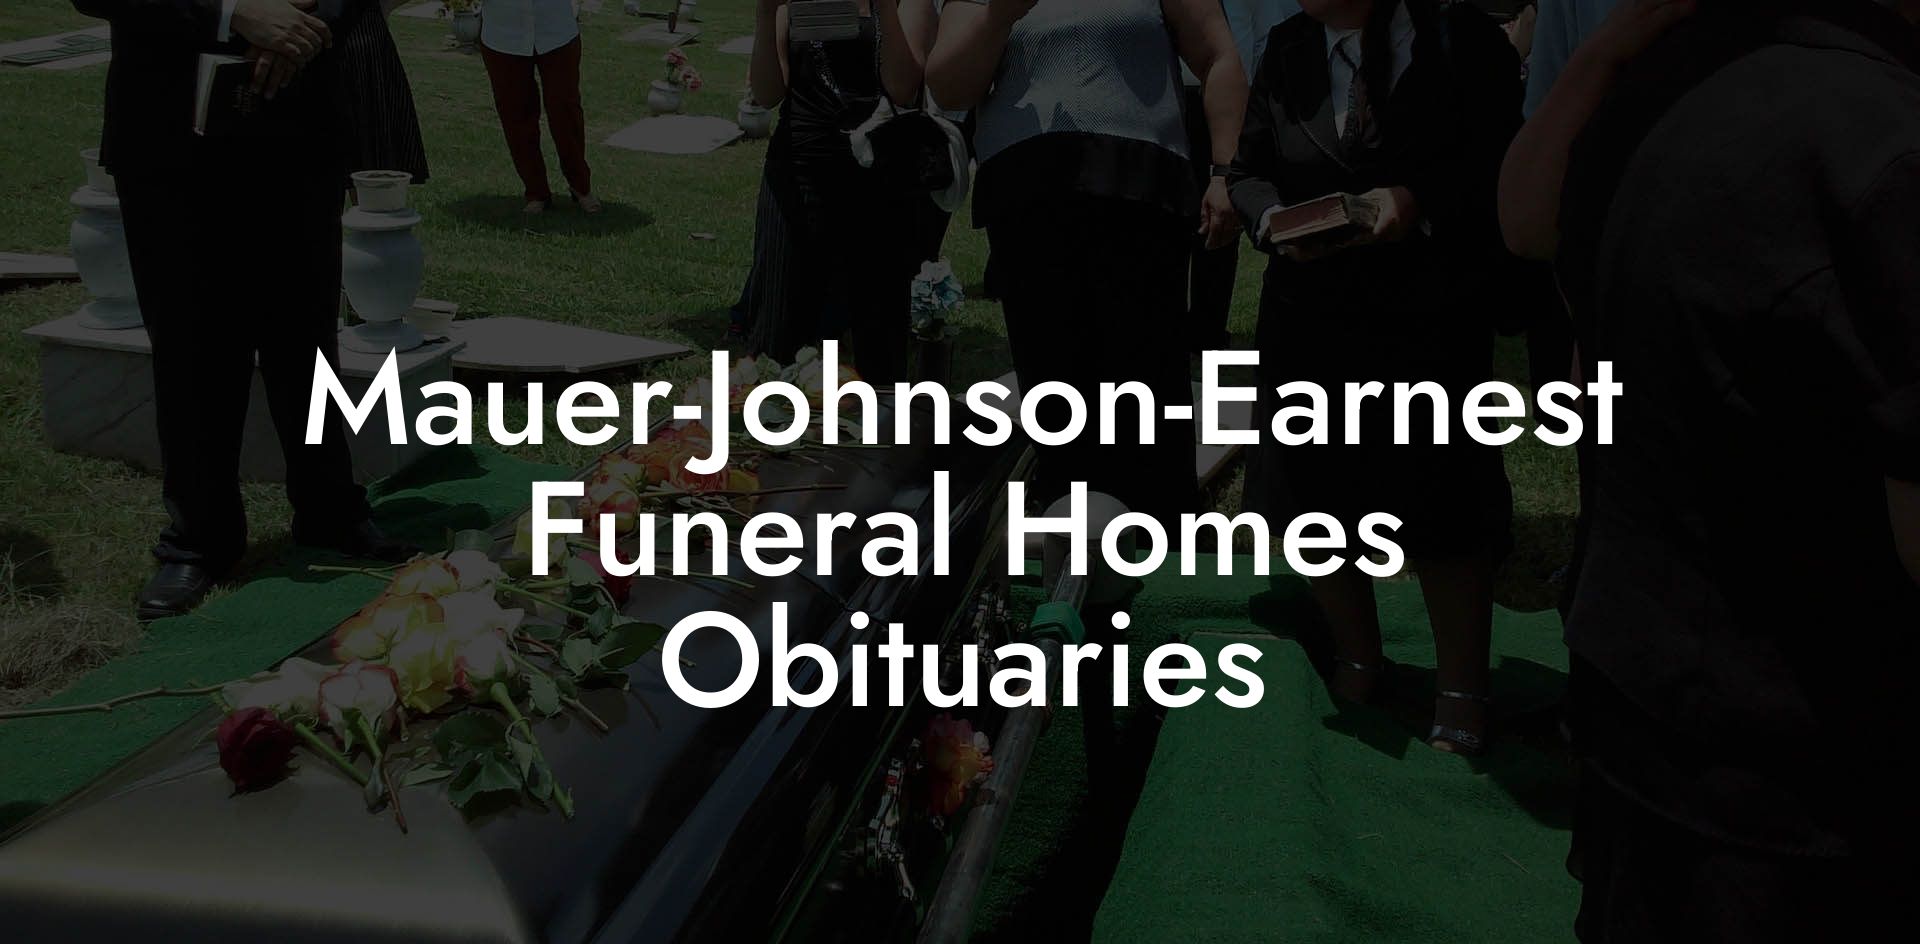 Mauer-Johnson-Earnest Funeral Homes Obituaries